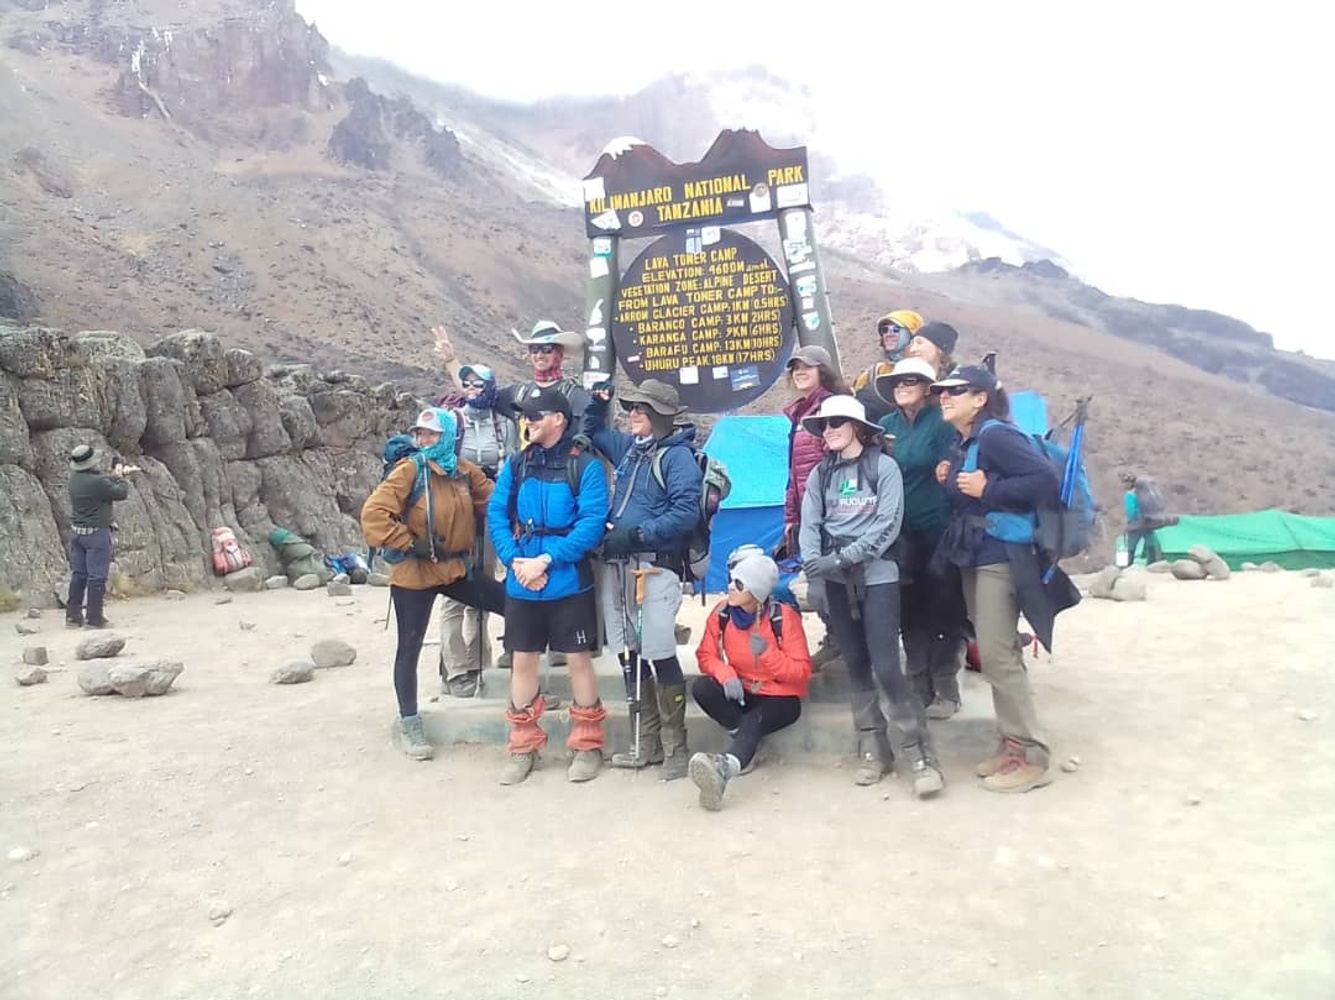 Umbwe route| 7 days Kilimanjaro Climbing operators 2022-2023